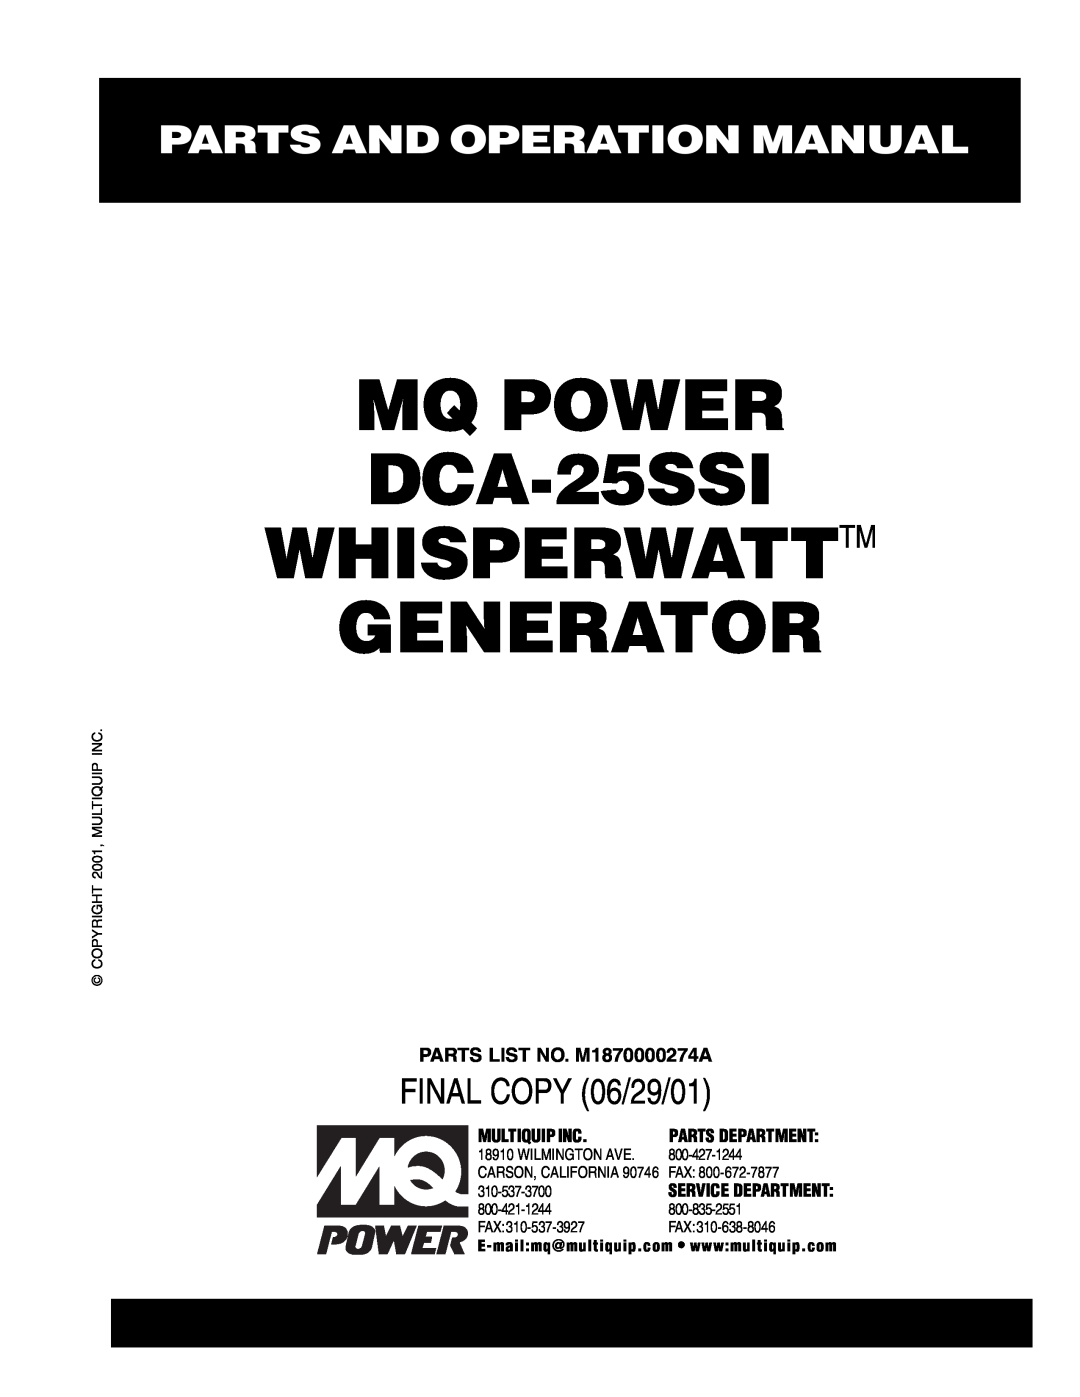 Multiquip operation manual Parts And Operation Manual, MQ POWER DCA-25SSI WHISPERWATTTM GENERATOR, FINAL COPY 06/29/01 